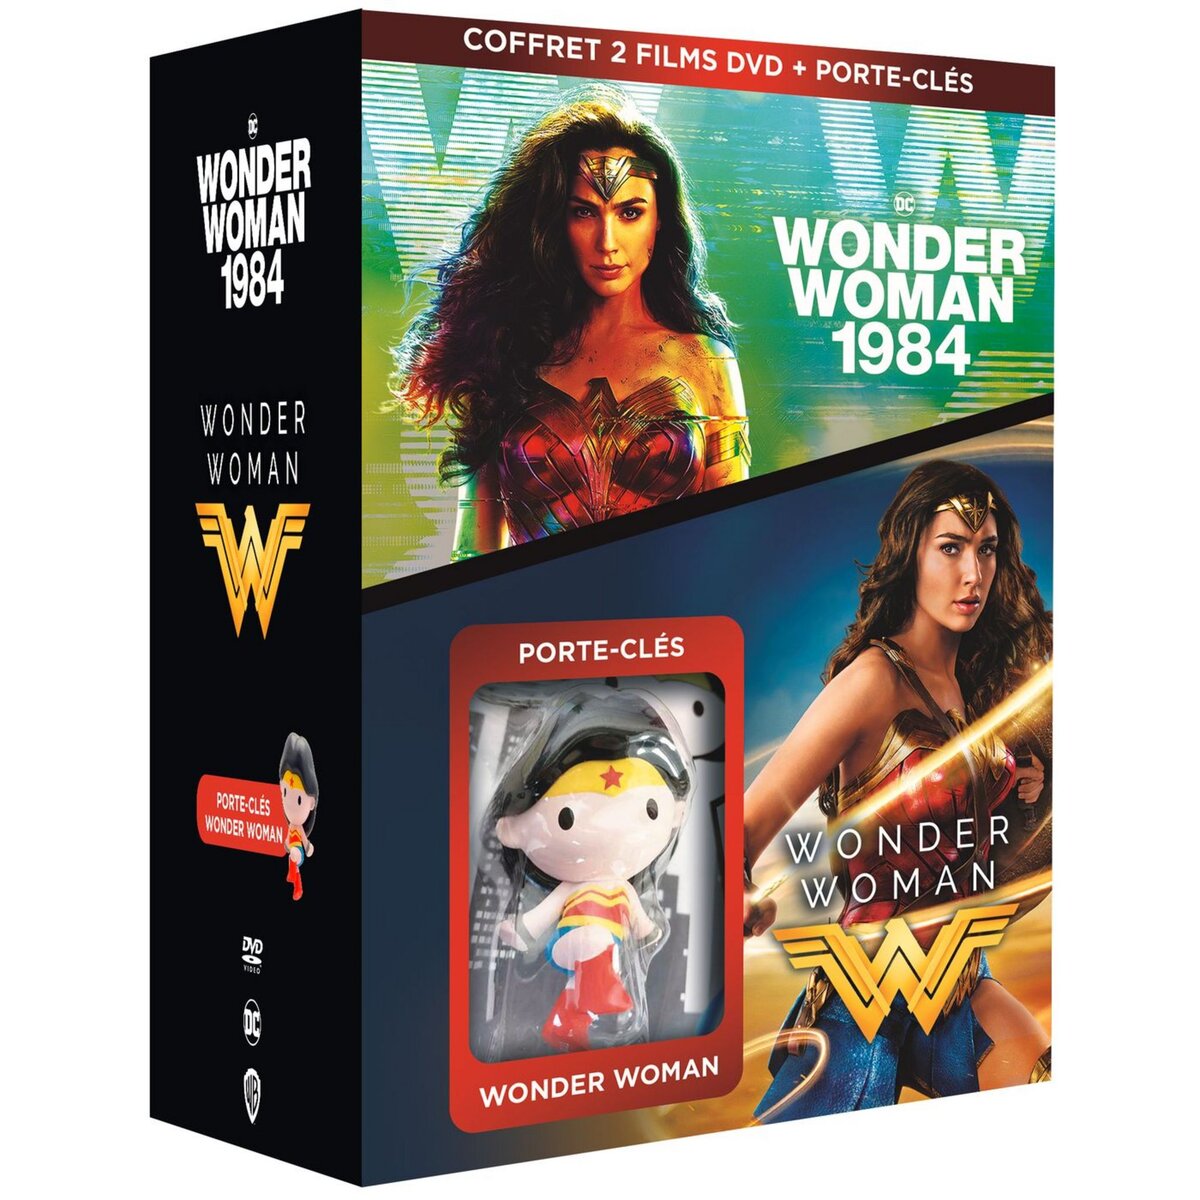 Coffret Wonder Woman et Wonder Woman 1984 Porte-clé Wonder Woman DVD